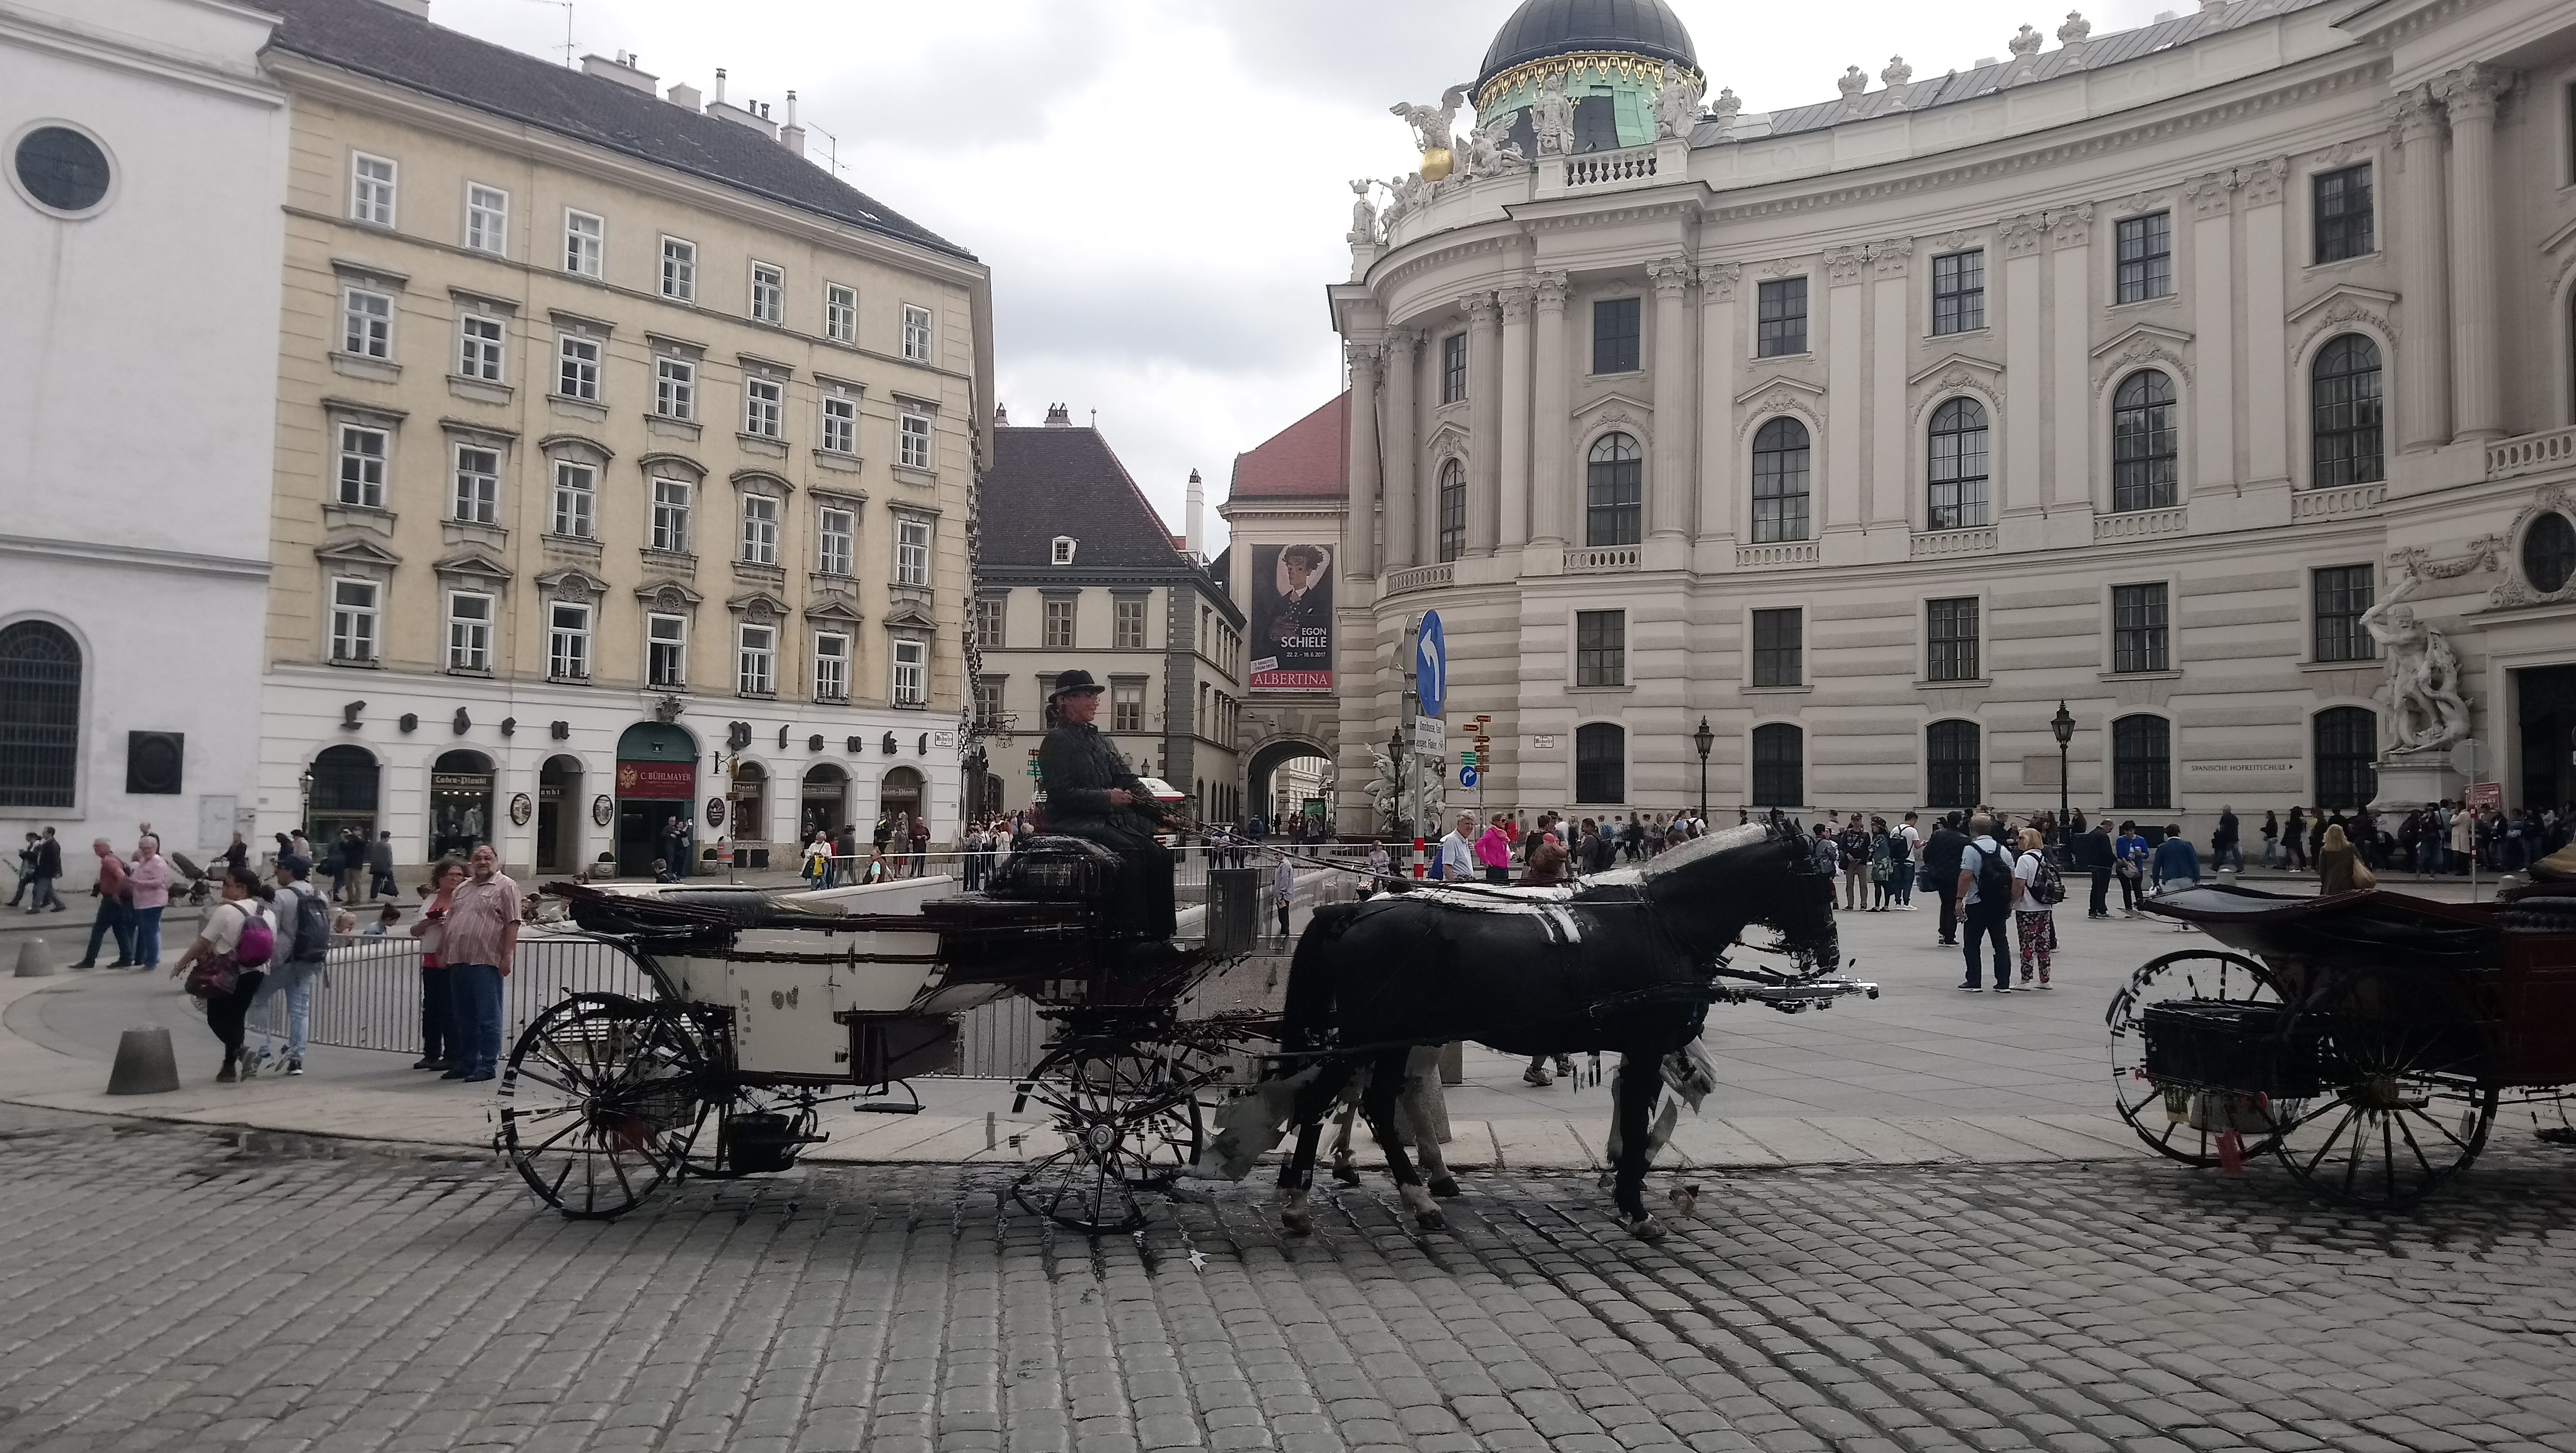 🐎  Horses in Vienna #myeuropaplog series 🐎  維也納的人與馬－歐洲行旅照片記錄系列 🐎